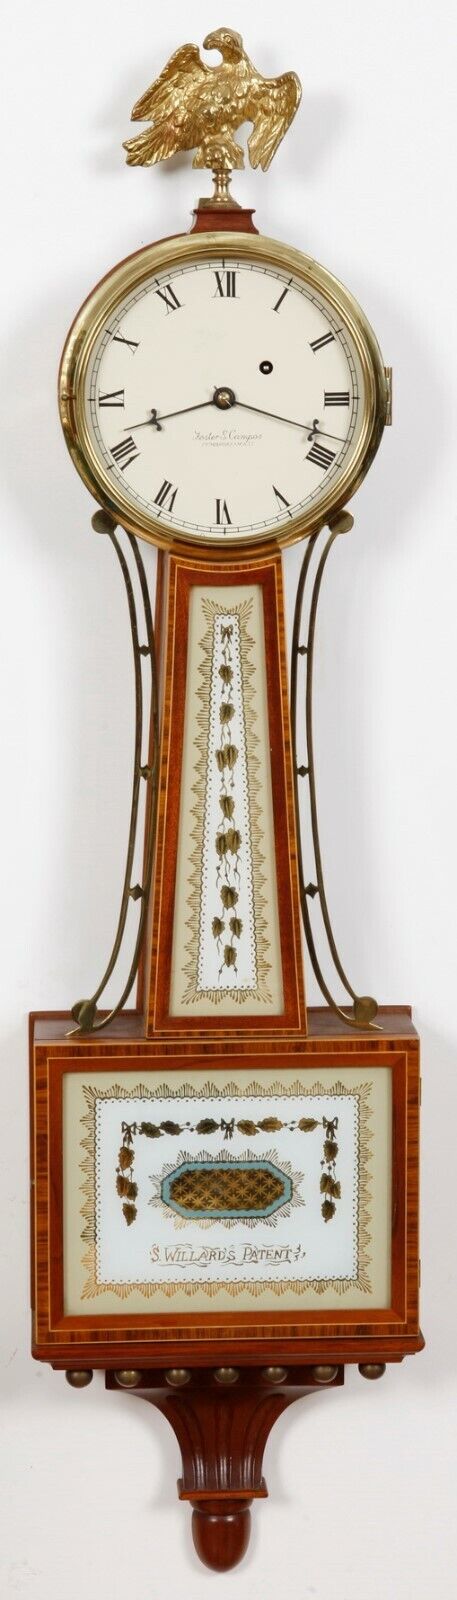 Foster S. Campos Pembroke MA No. 25, 1977 Weight Driven Cross Banded Banjo Clock